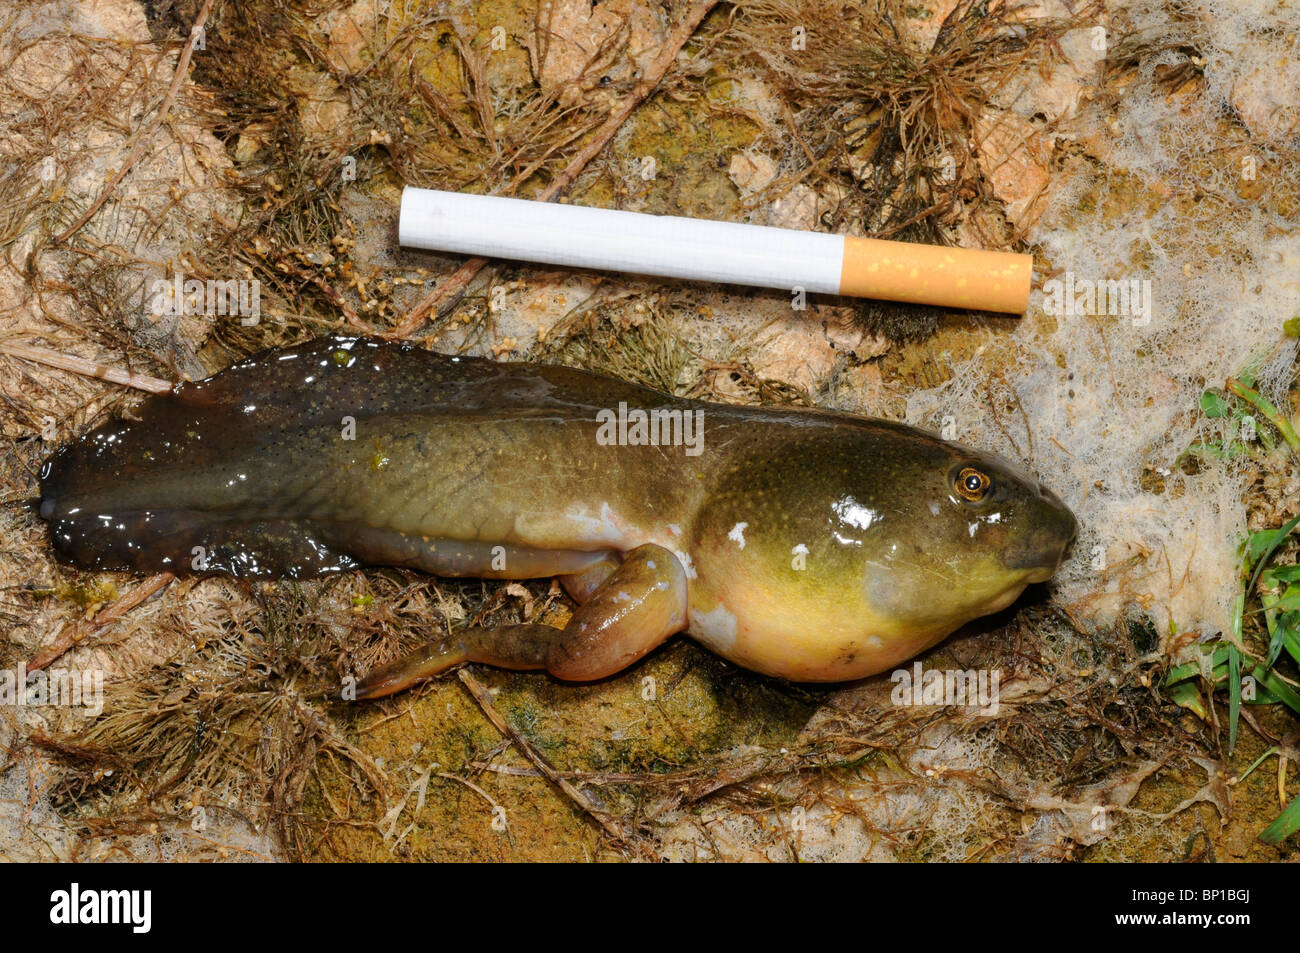 bullfrog, American bullfrog (Lithobates catesbeianus, Rana catesbeiana), tadpole, comparison with a cigarette, Greece, Creta Stock Photo